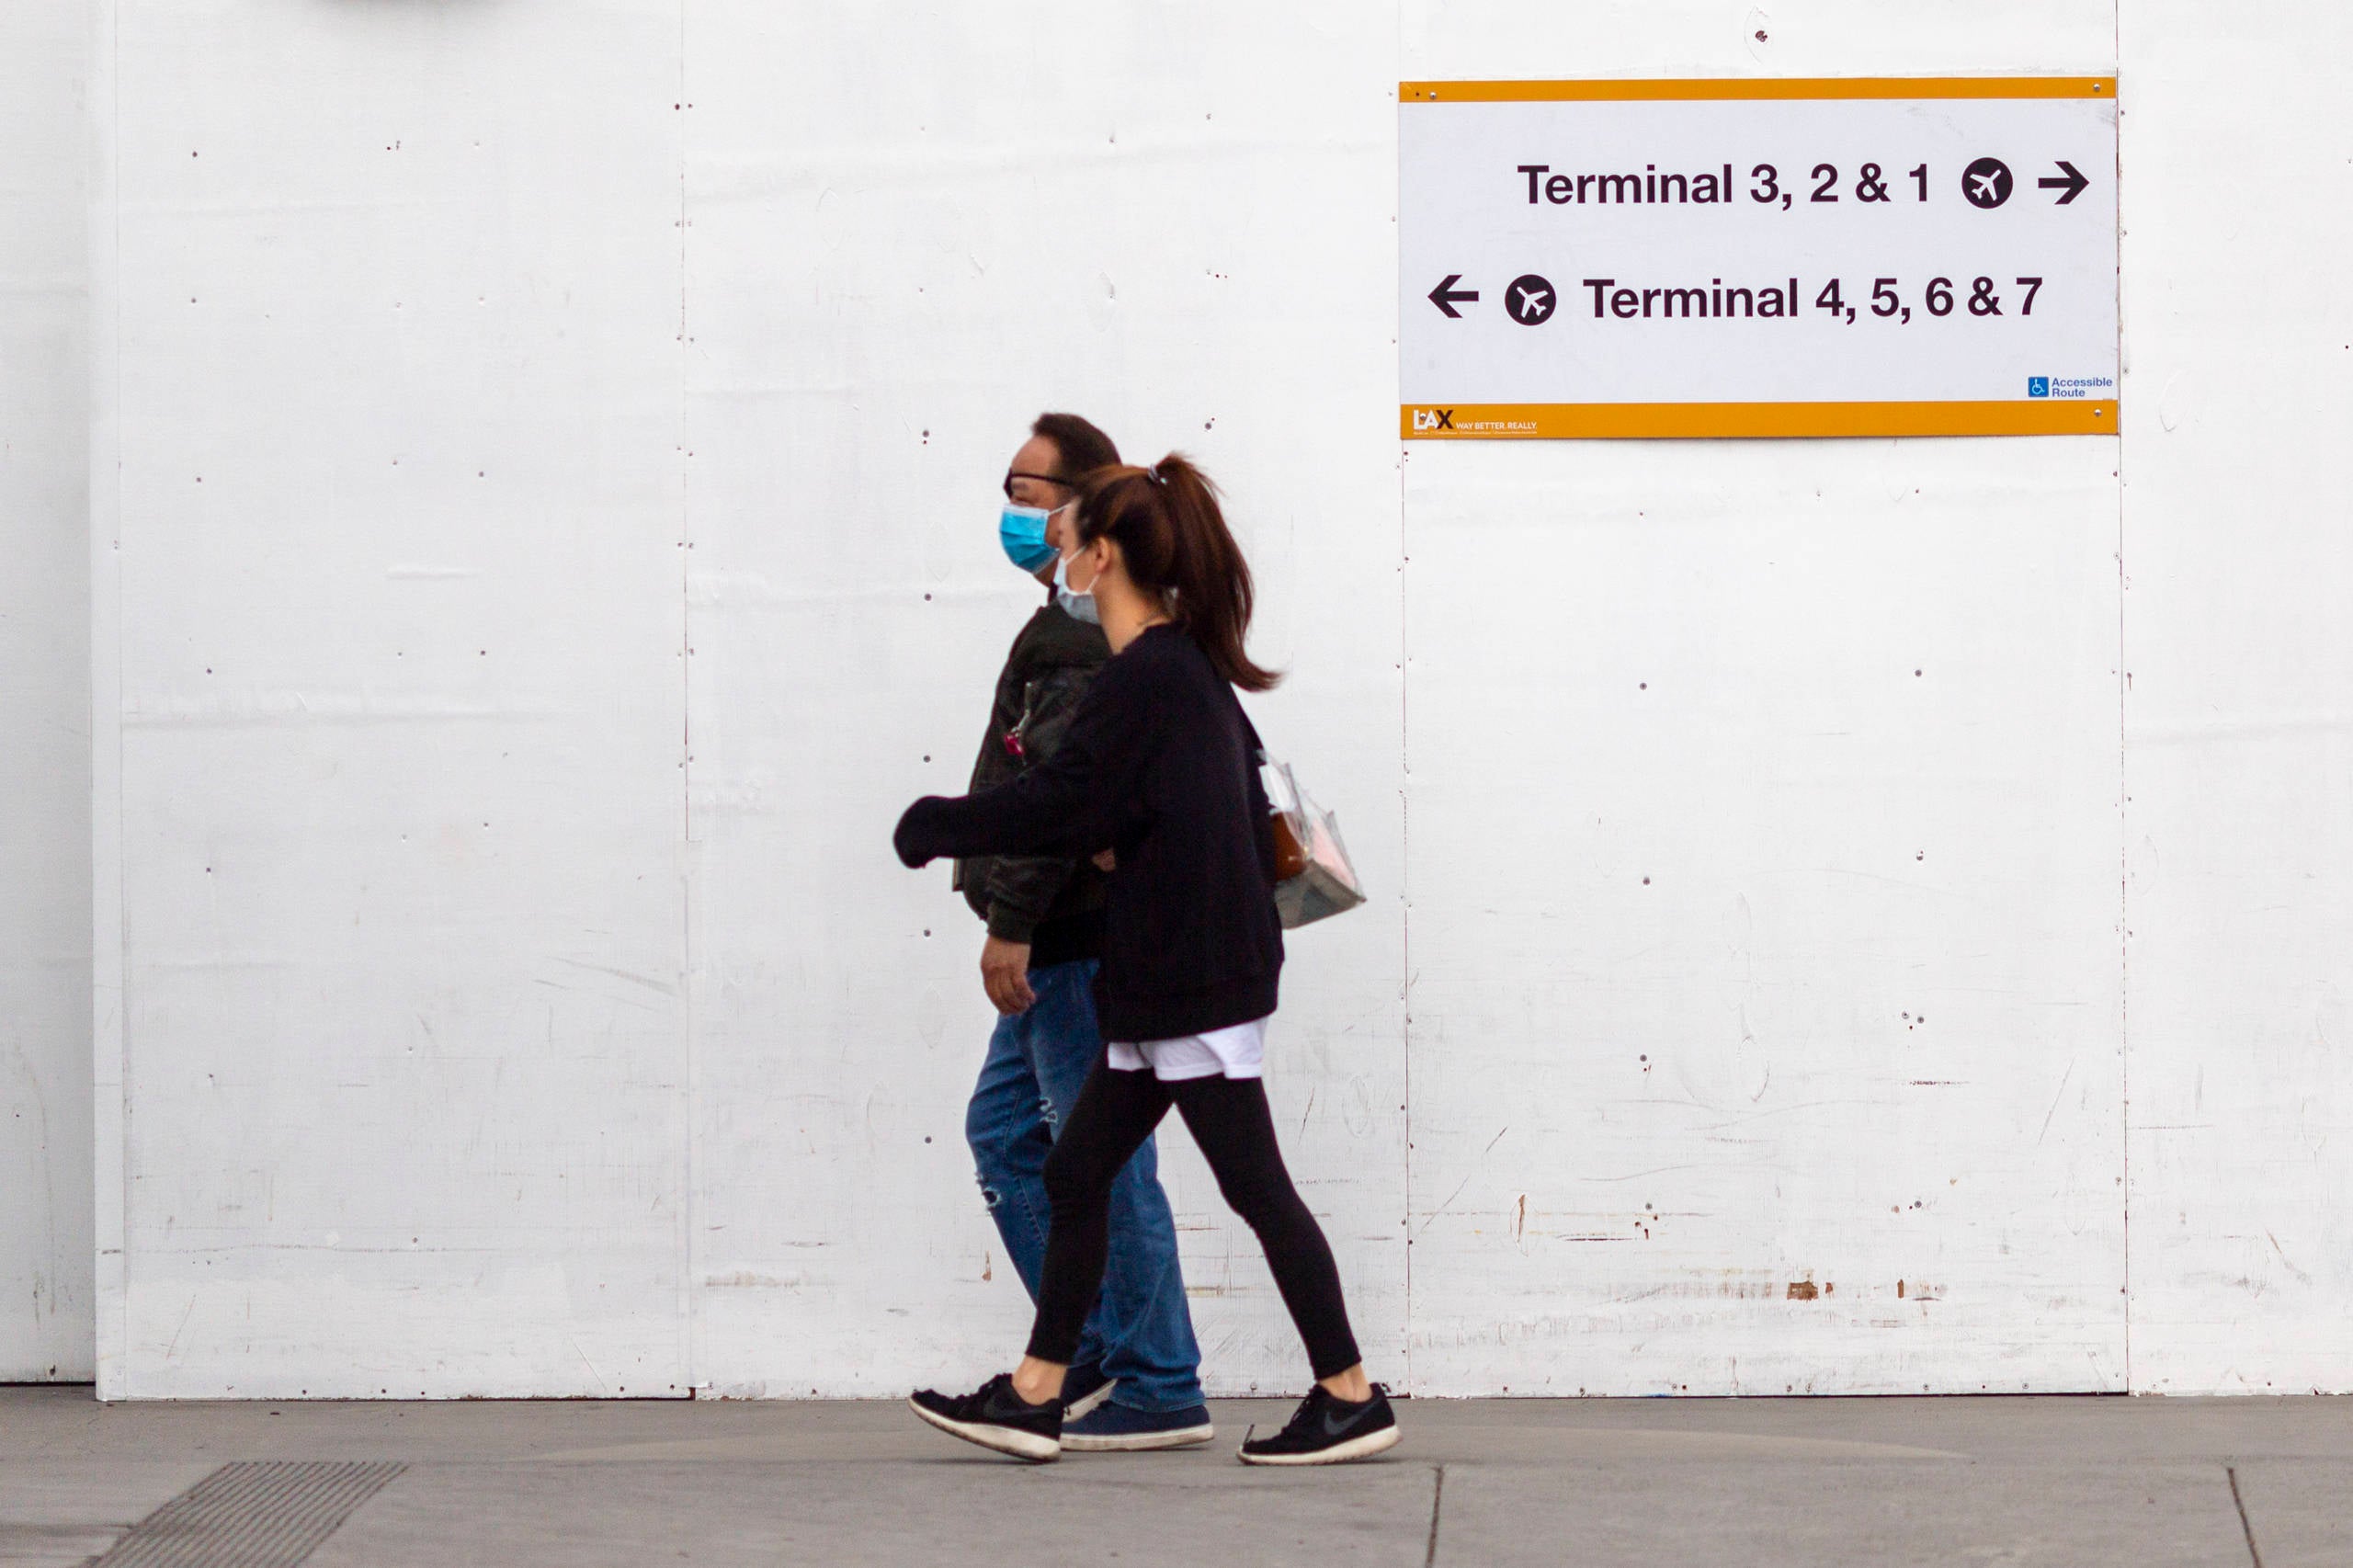 Passenger Traffic At LAX Airport Drops 90% During Coronavirus Pandemic